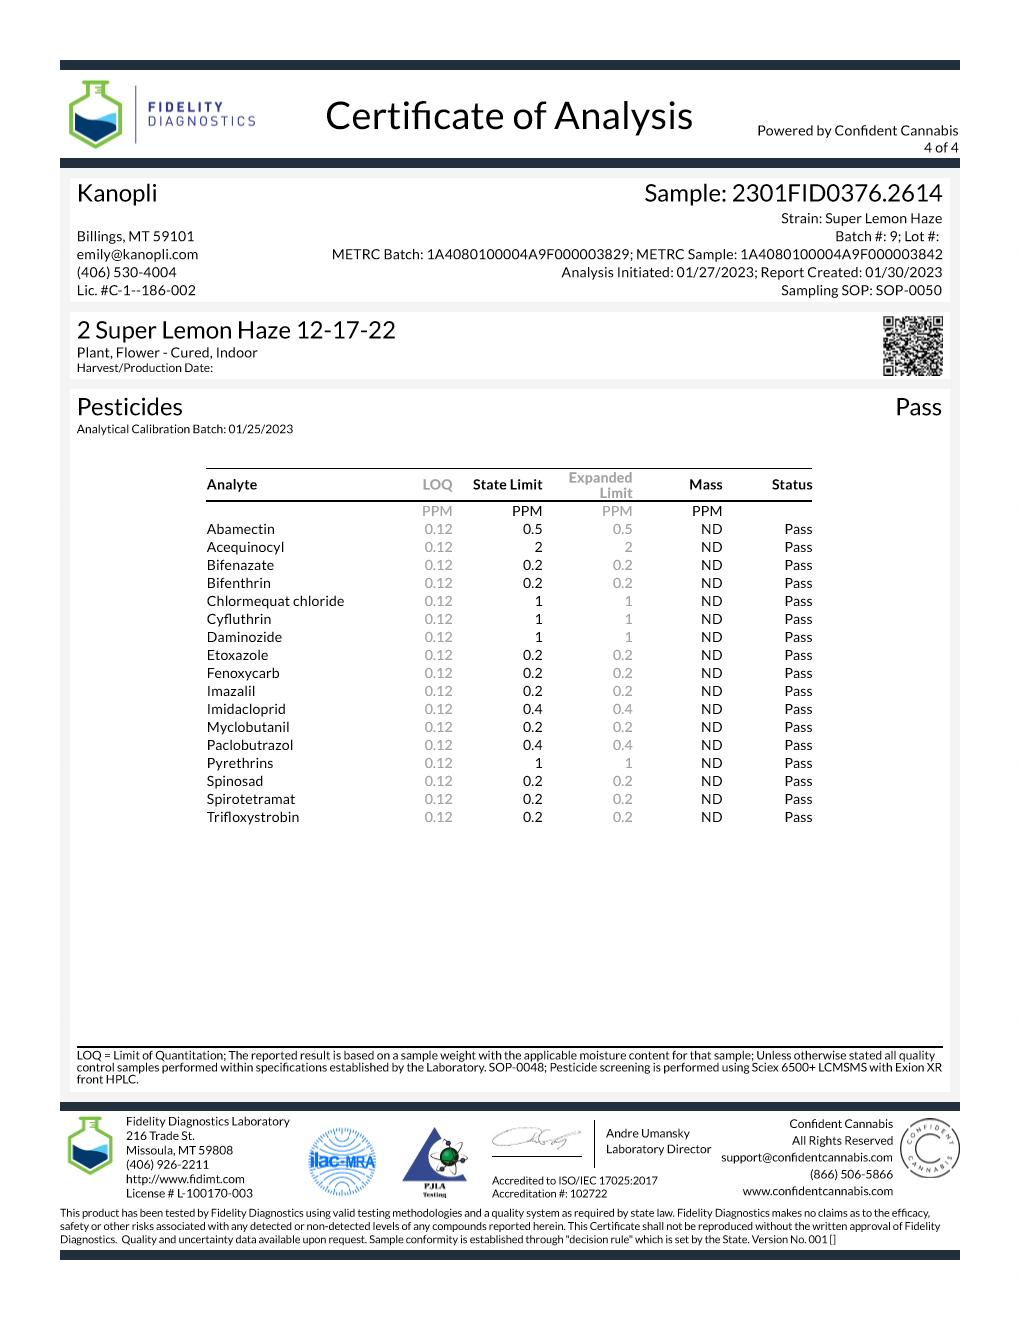 1/4 oz. Super Lemon Haze - Sativa (22.27% THC) Dec. 2022